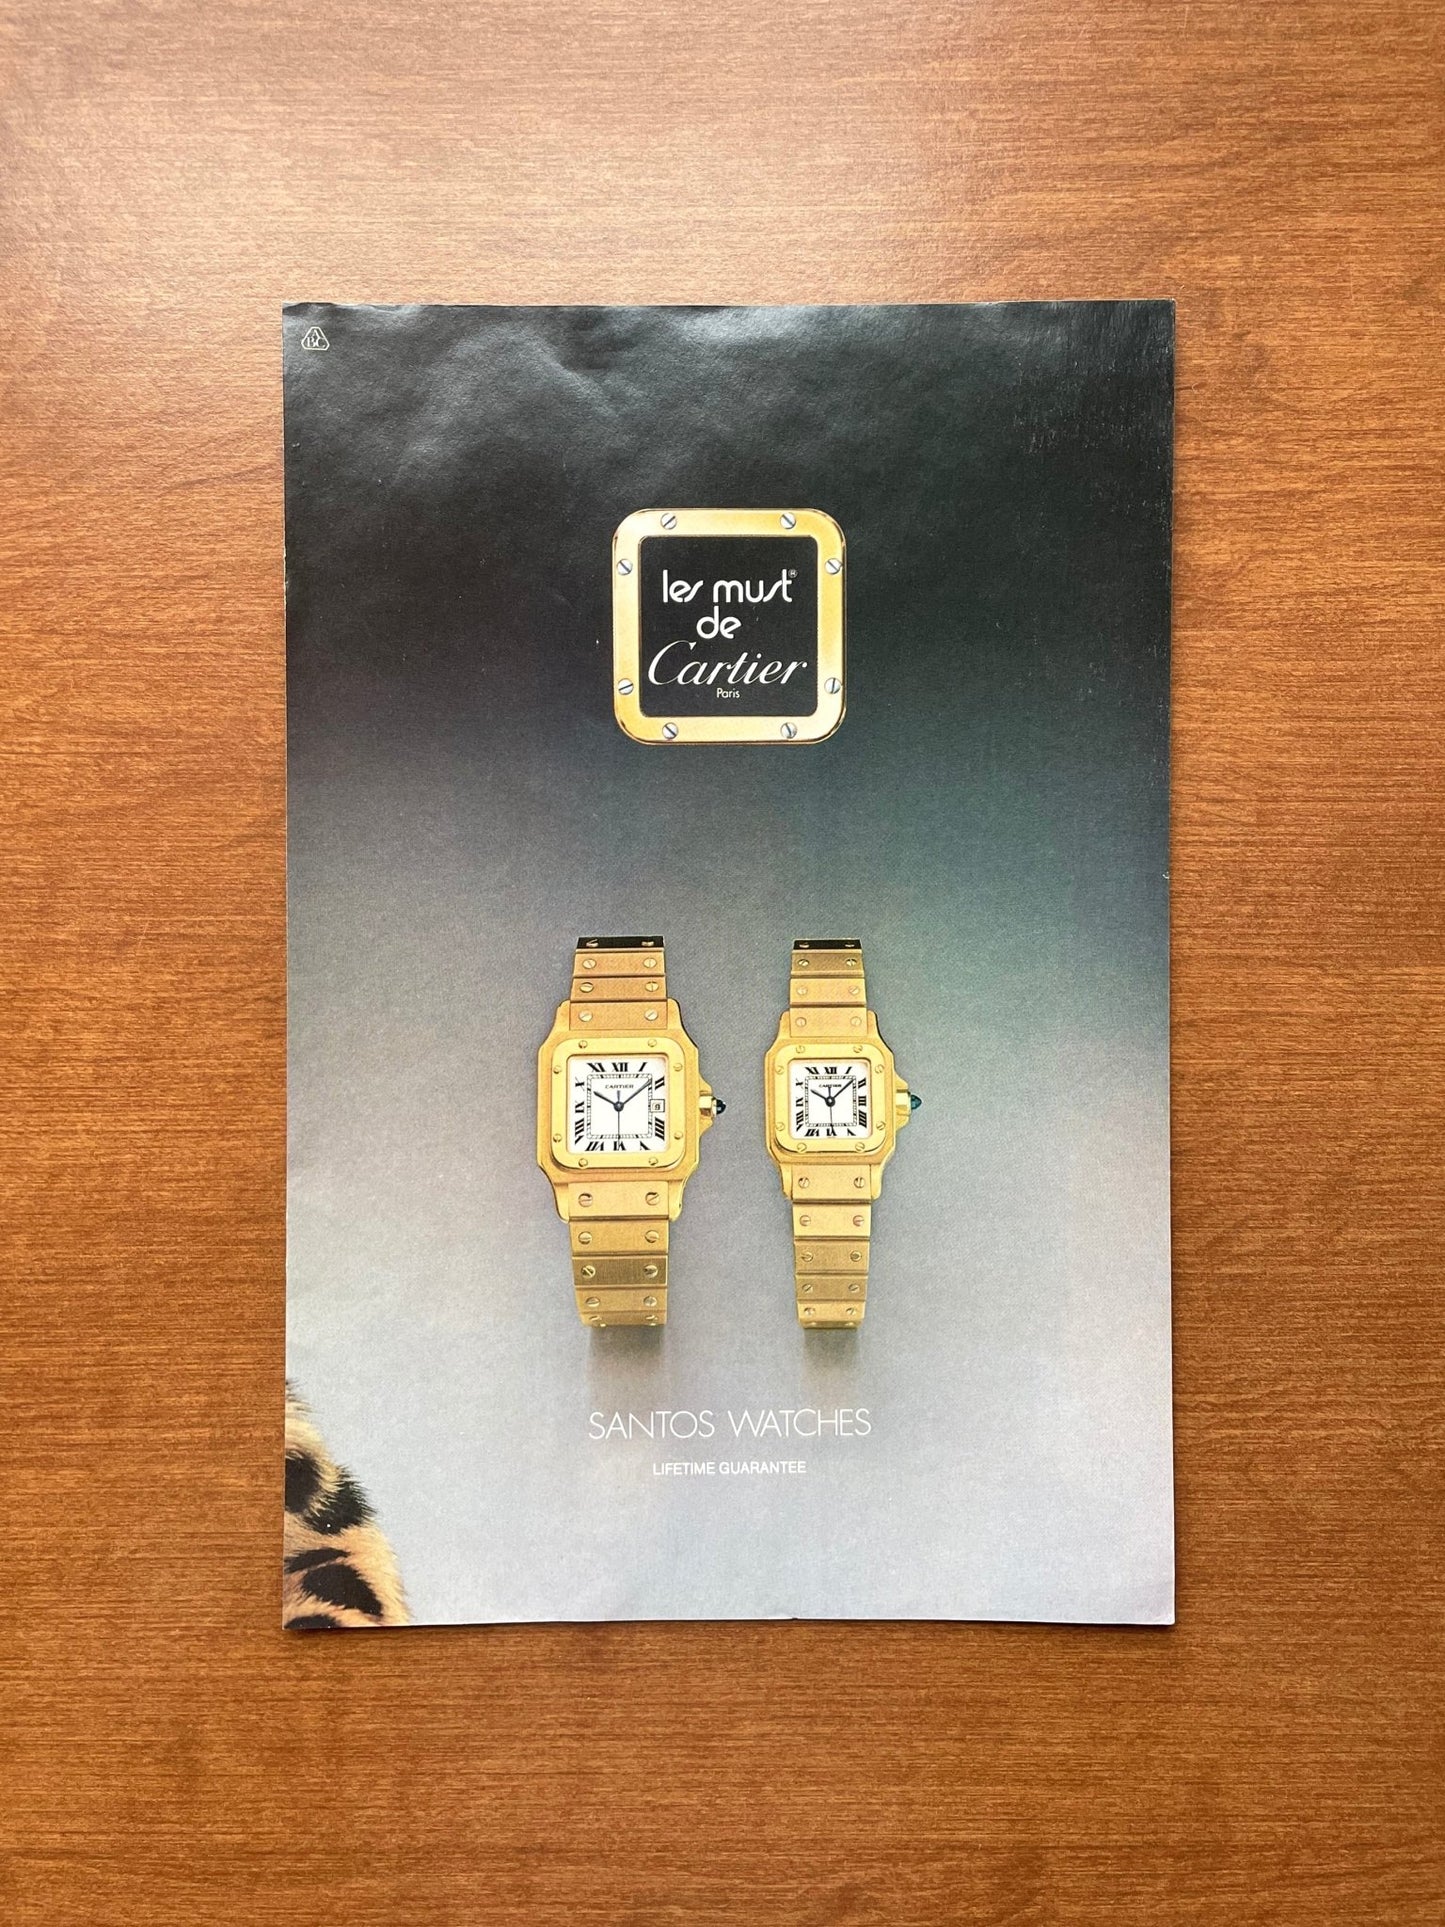 1982 Cartier Santos Watches Advertisement